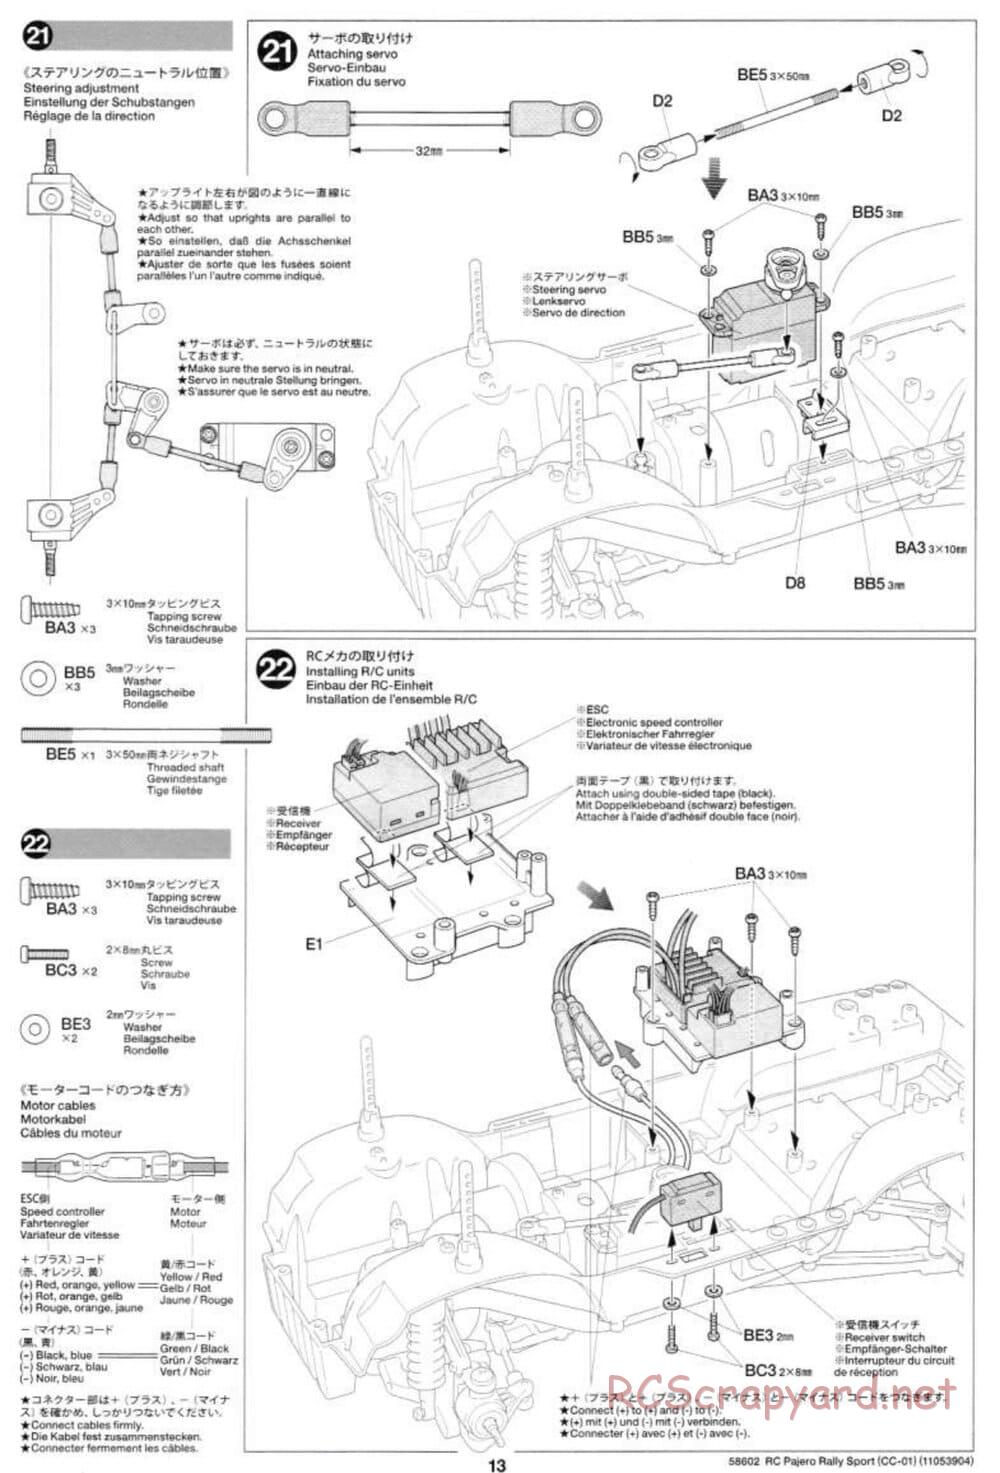 Tamiya - Mitsubishi Pajero Rally Sport - CC-01 Chassis - Manual - Page 13